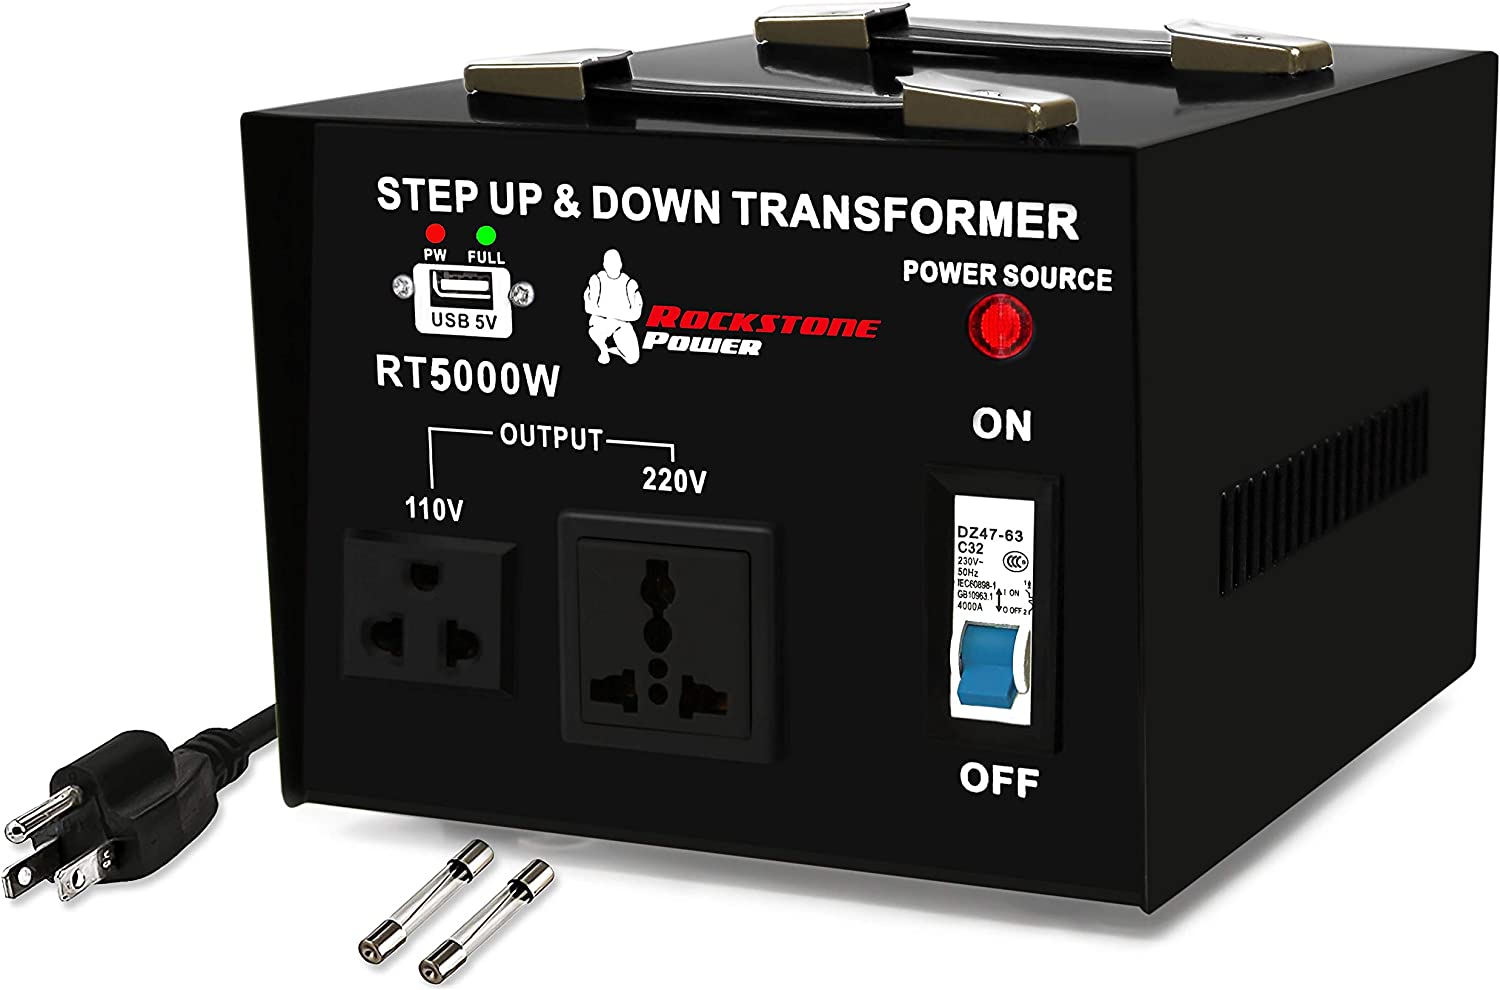 ROCKSTONE POWER 3000 Watt Voltage Converter Transformer – Heavy Duty Step Up/Down AC 110V/120V/220V/240V Power Converter – Circuit Breaker Protection – DC 5V USB Port – CE Certified [3-Year Warranty]